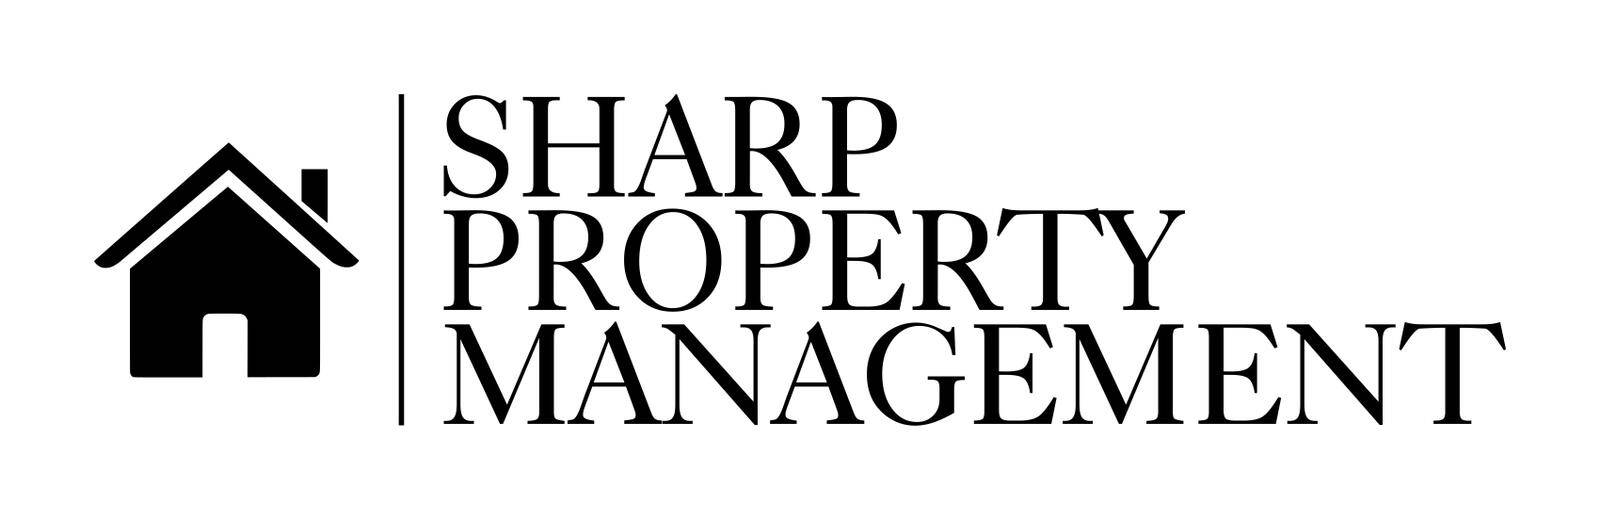 Sharp Property Management